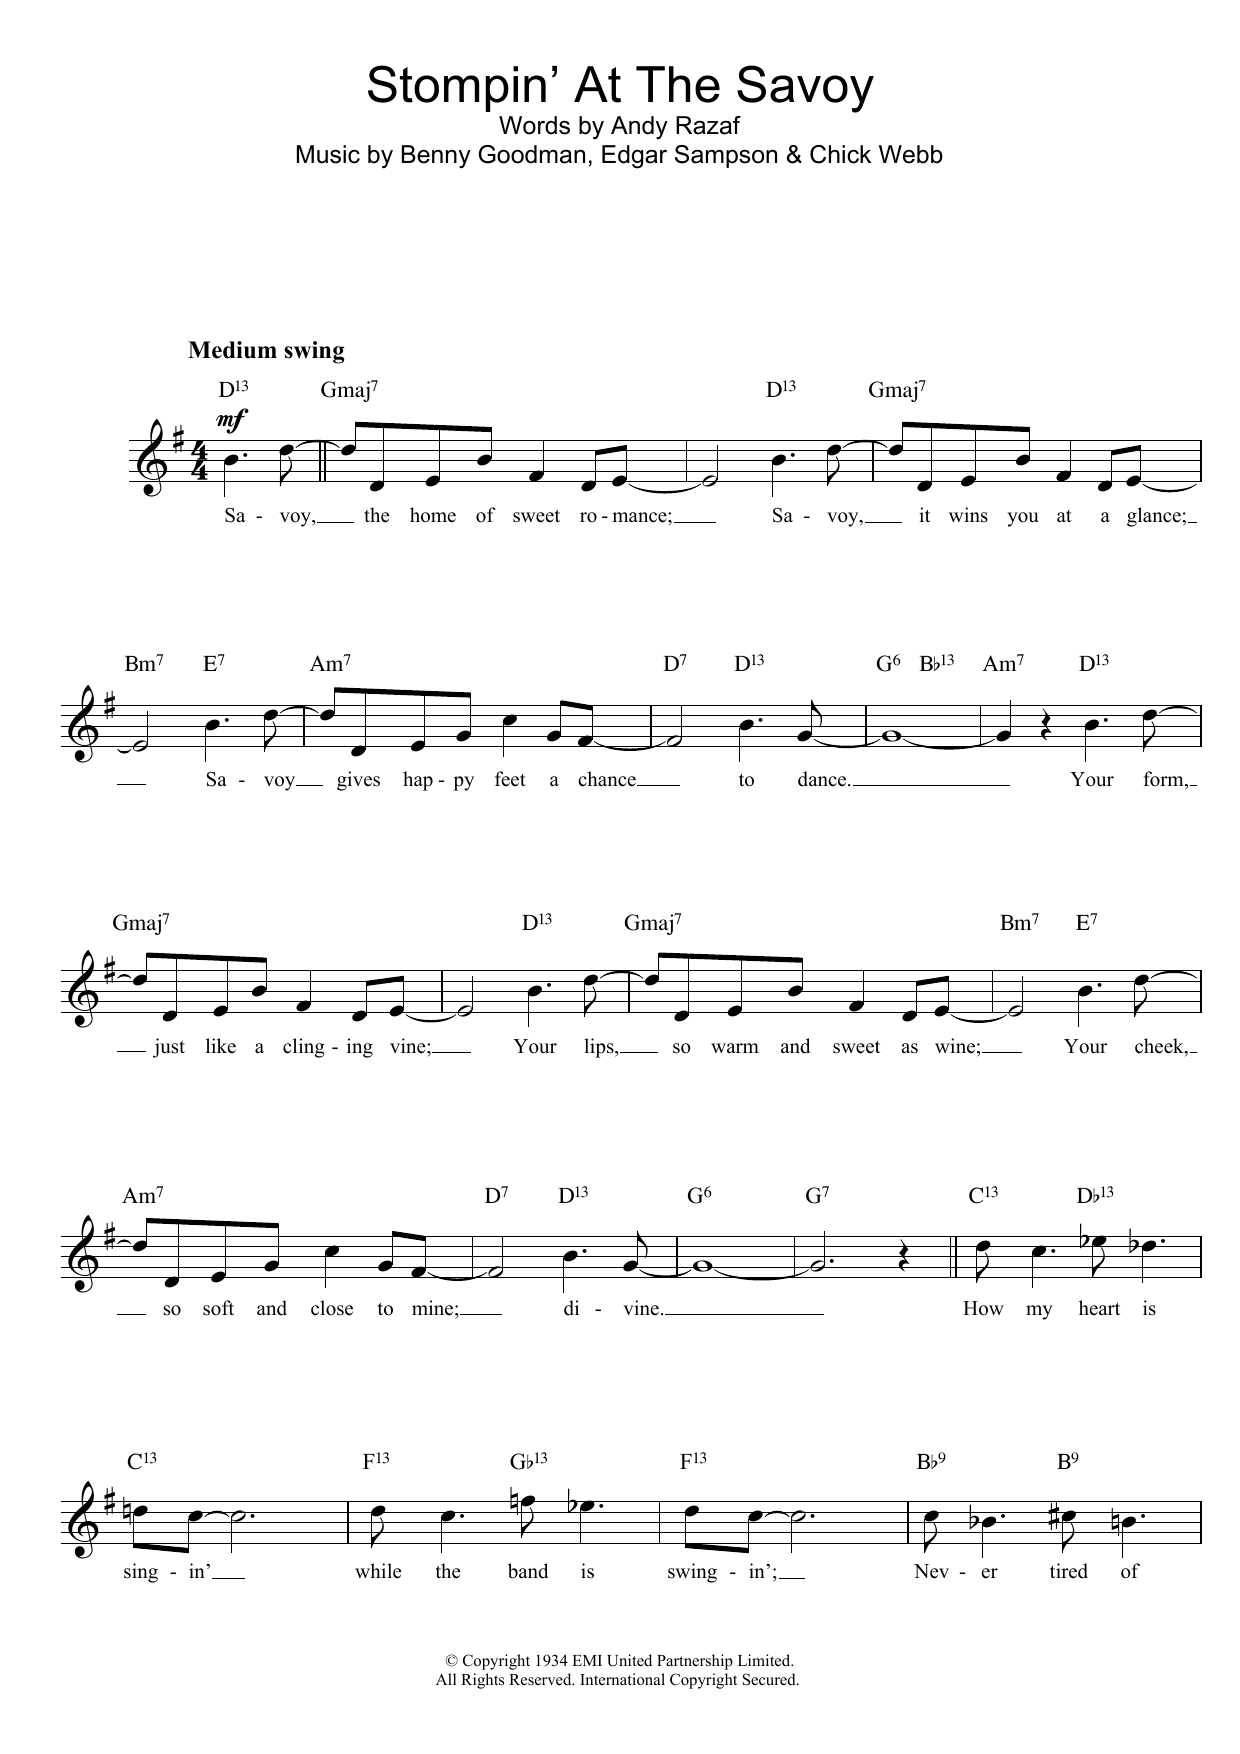 Benny Goodman Stompin' At The Savoy Sheet Music Notes & Chords for Viola - Download or Print PDF